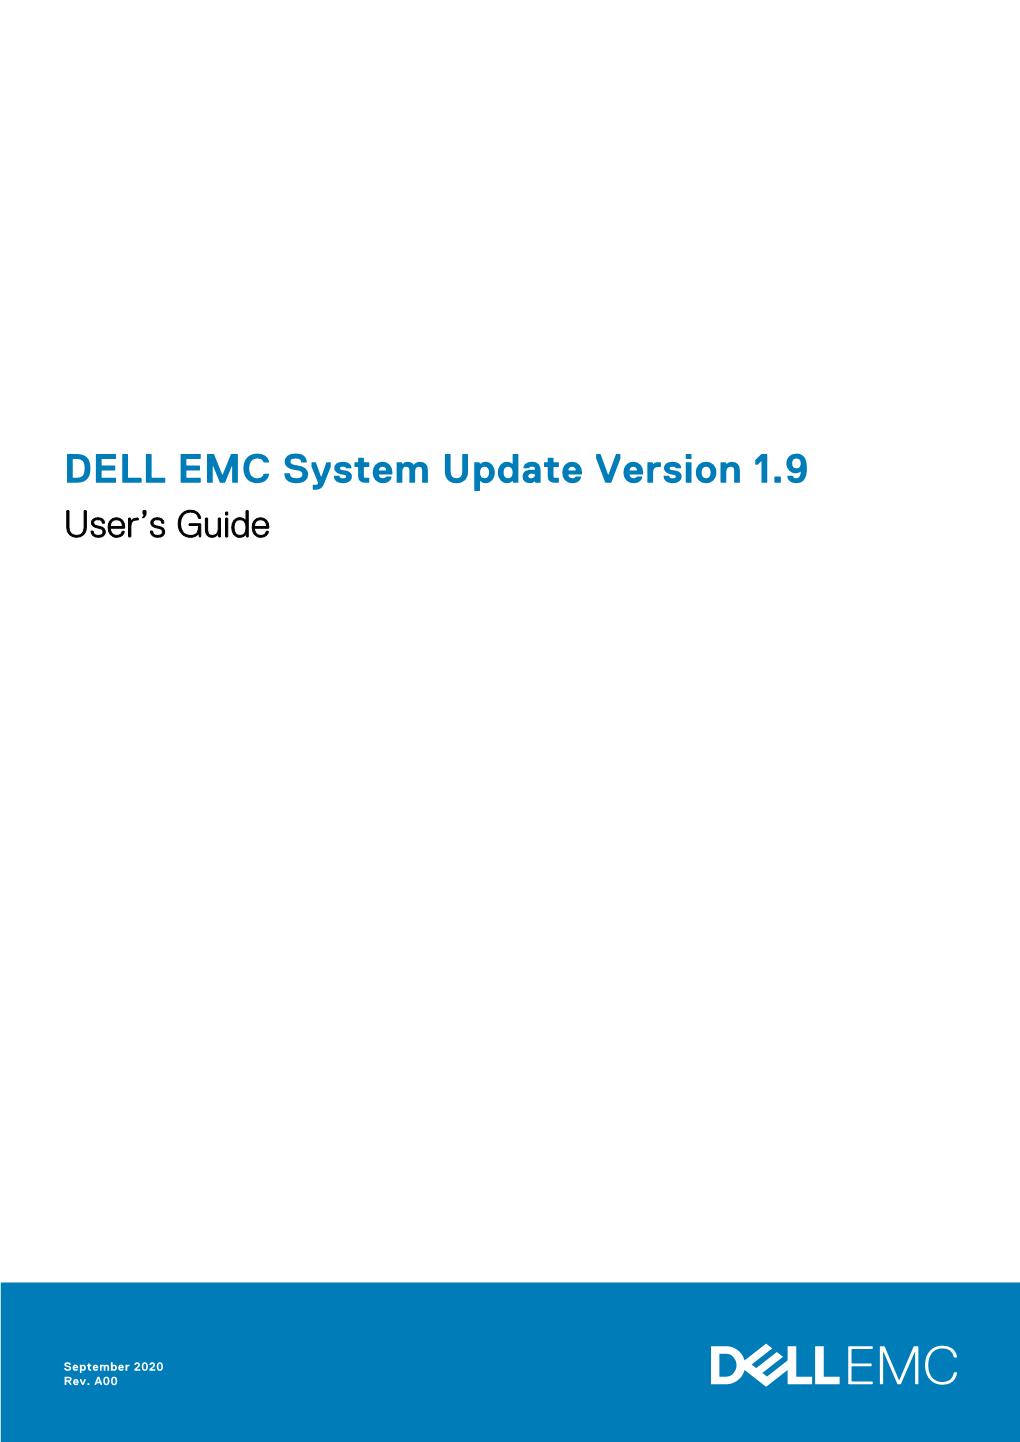 DELL EMC System Update Version 1.9 User's Guide